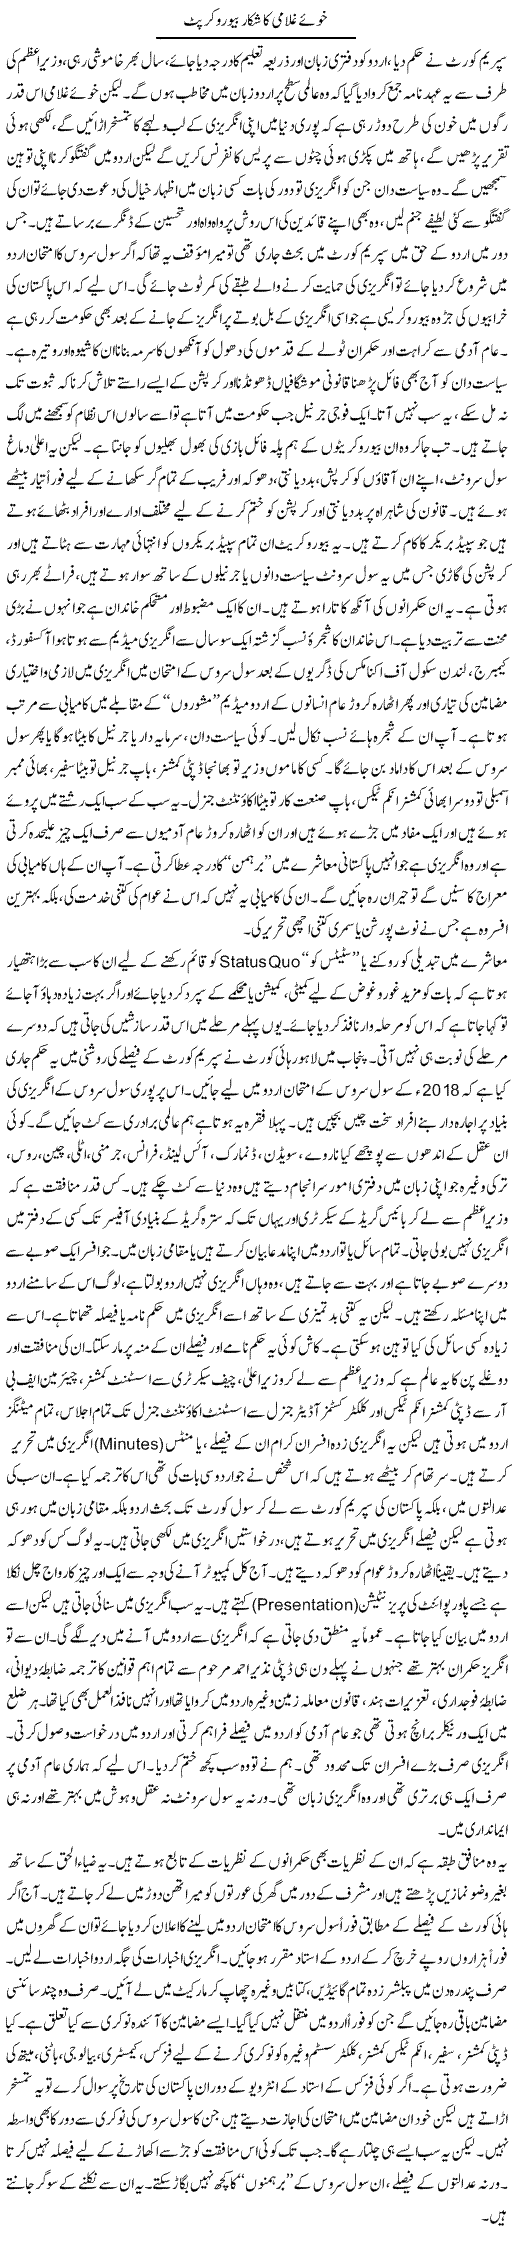 Khooe Ghulami Ka Shikaar Bureau Corrupt | Orya Maqbool Jan | Daily Urdu Columns